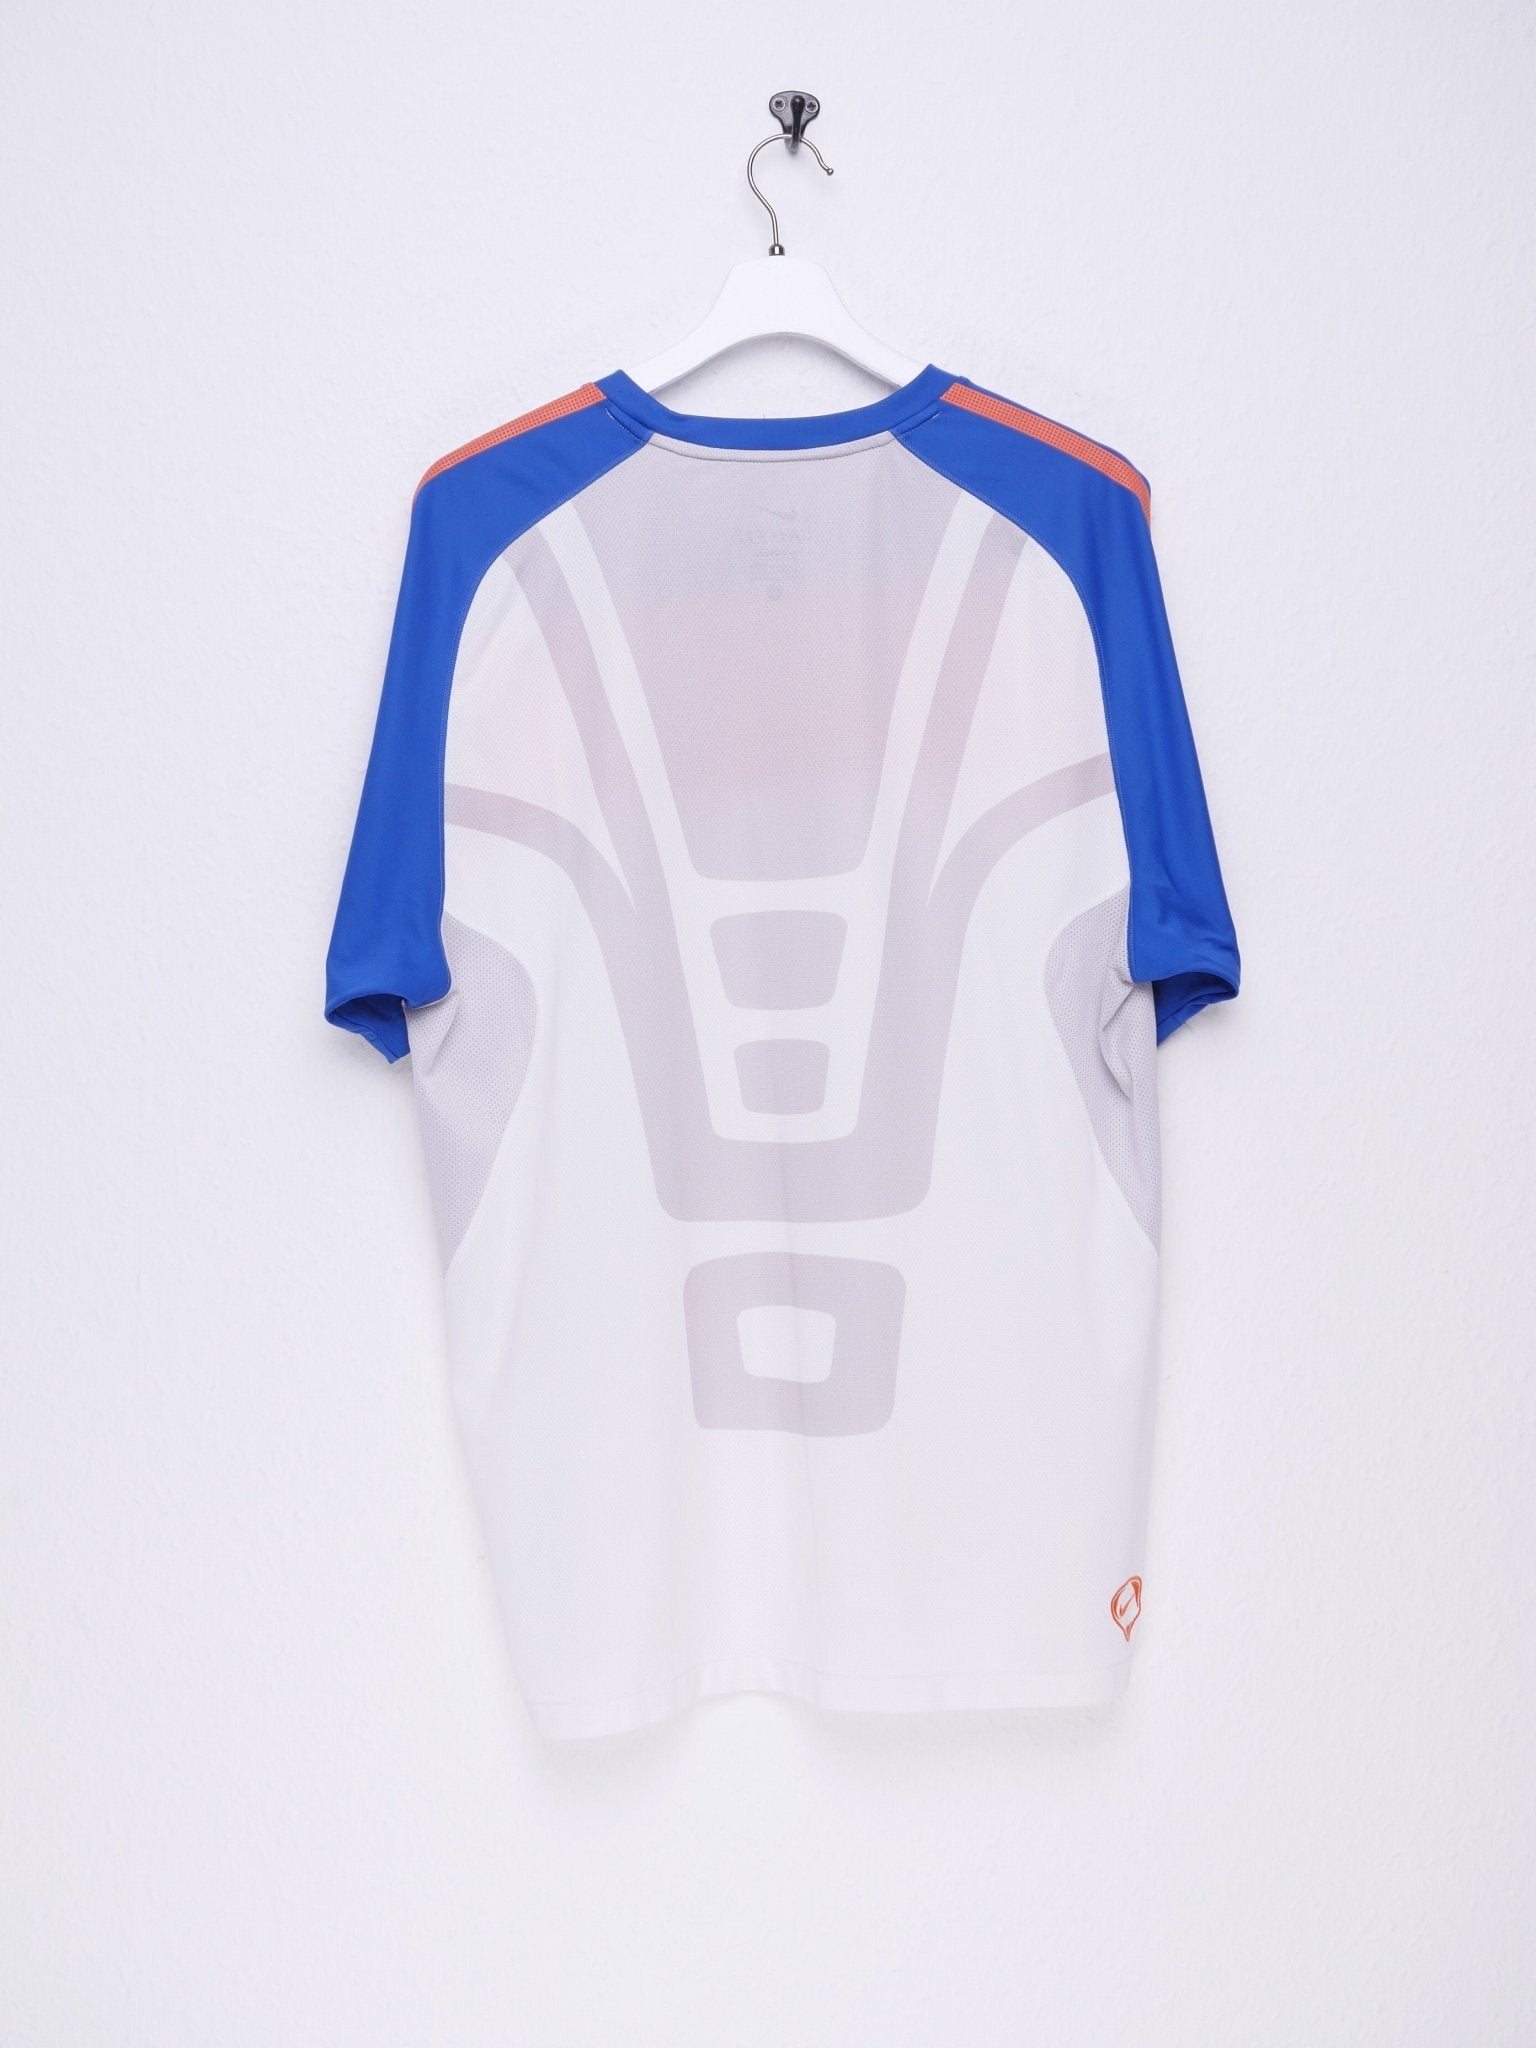 nike printed Swoosh 'KNVB' three toned Jersey Shirt - Peeces